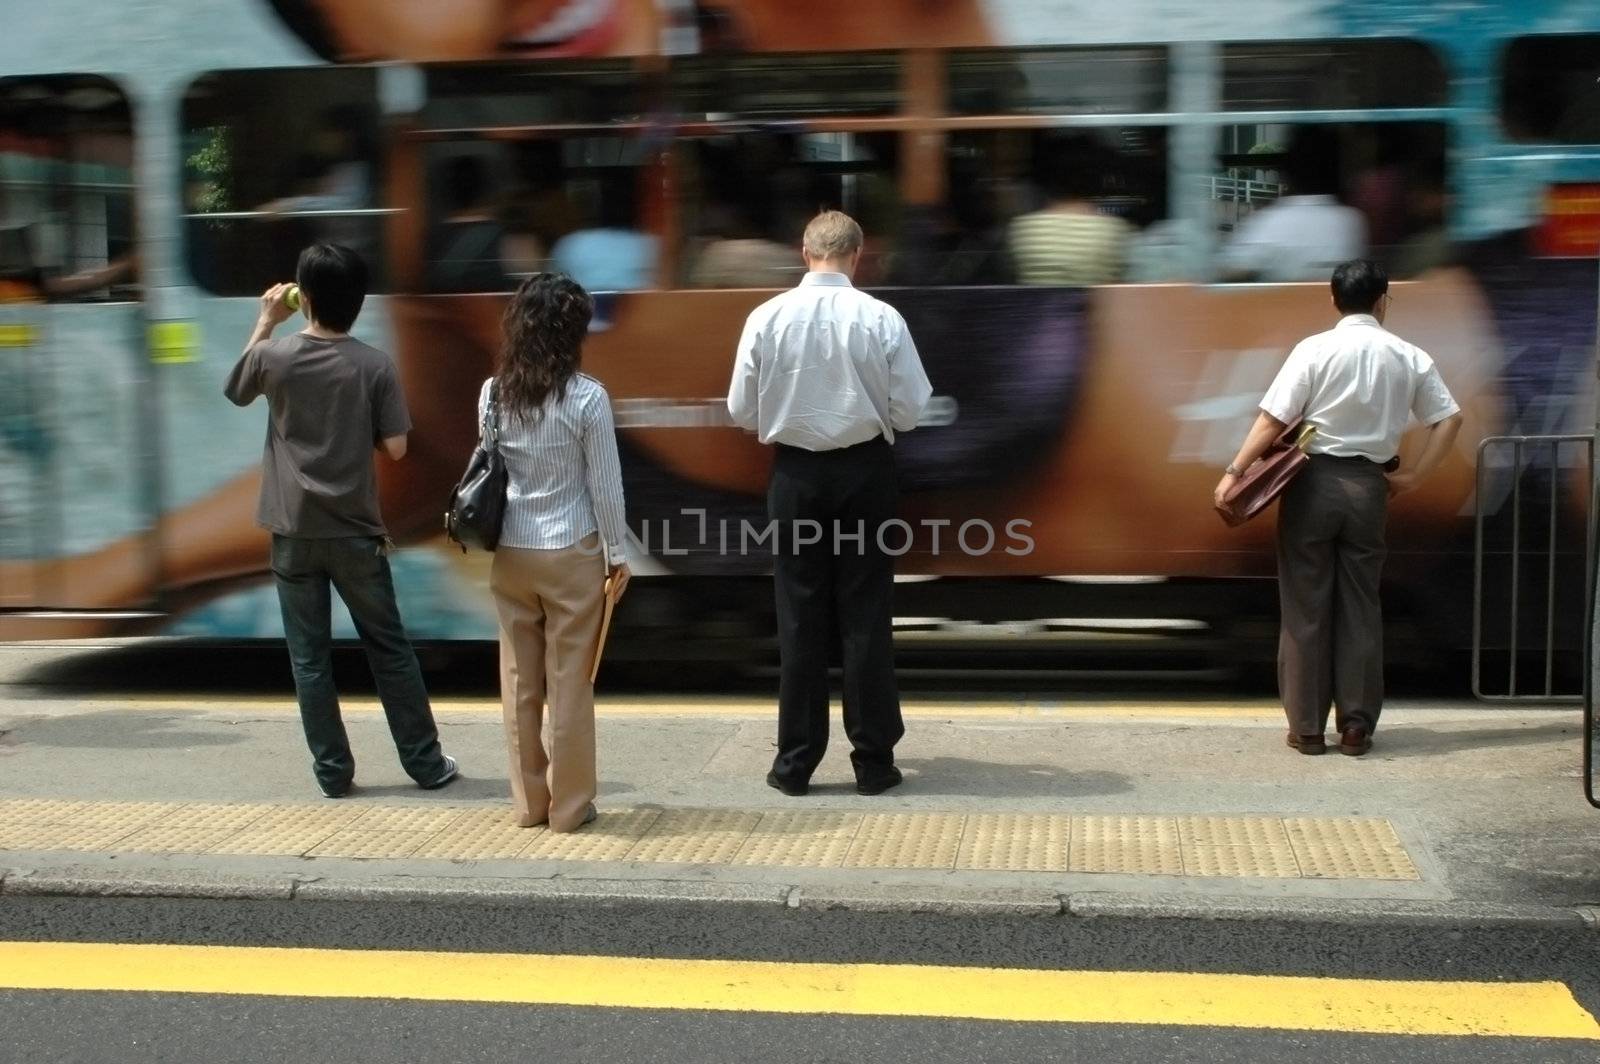 People in Hongkong waiting for green light, tram passing.